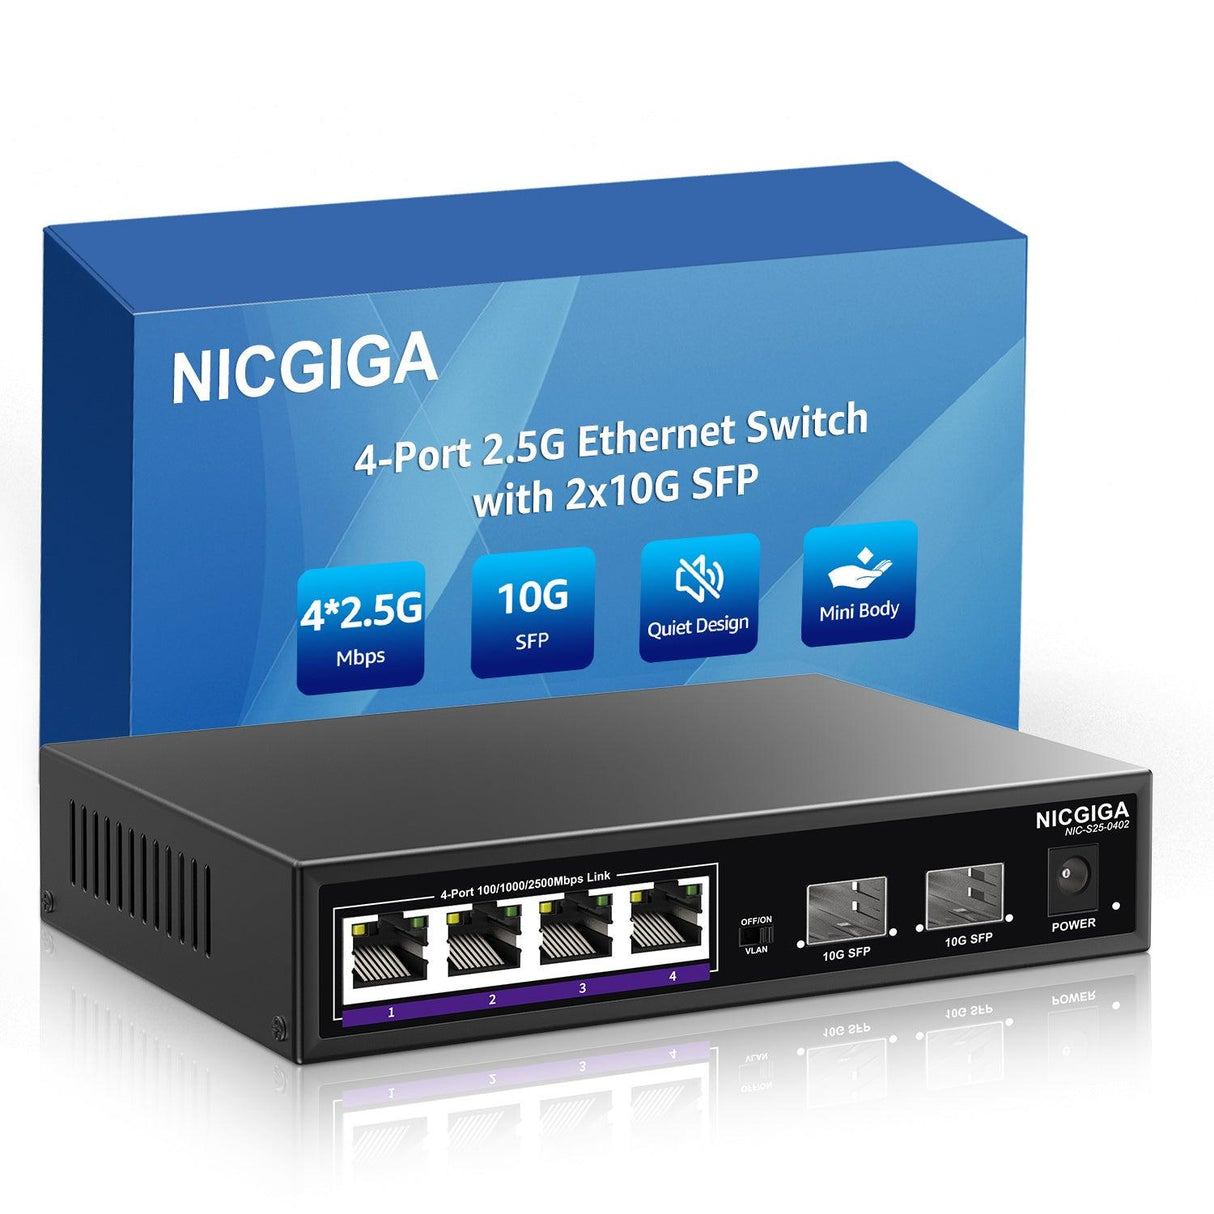 NICGIGA 6 Port 2.5G Ethernet Switch with 4X 2500Mbps + 2X 10G SFP Uplink Port , Unmanaged 2.5Gb Network Switch, One-Key VLAN, Plug & Play, Desktop/Wall-Mount, Fanless Metal Design.